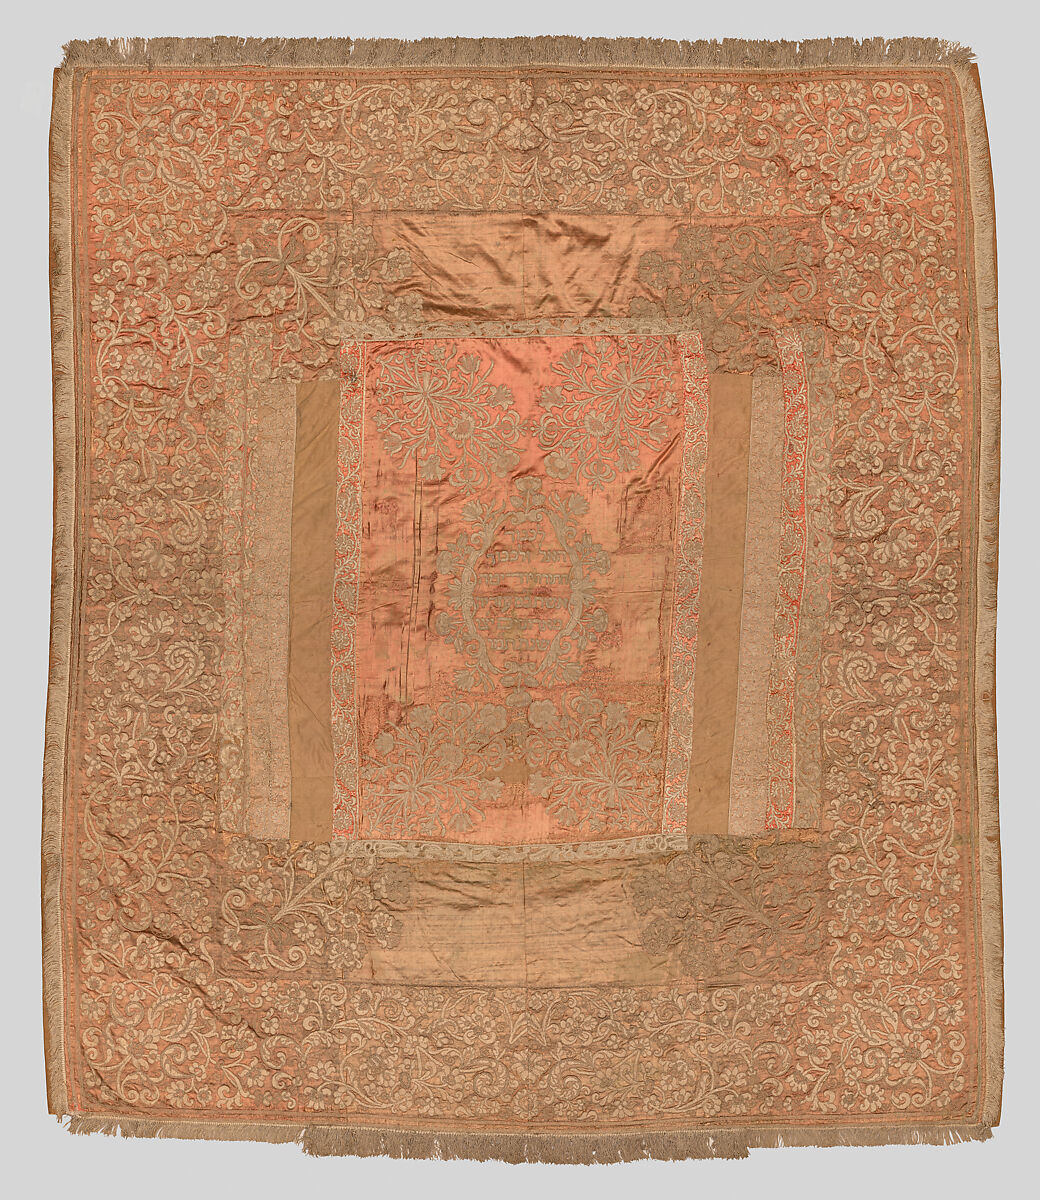 Torah Ark Curtain, Cotton embroidery appliquéd on satin ground, reticella needle lace and milanese bobbin lace, Italian, Mantua 